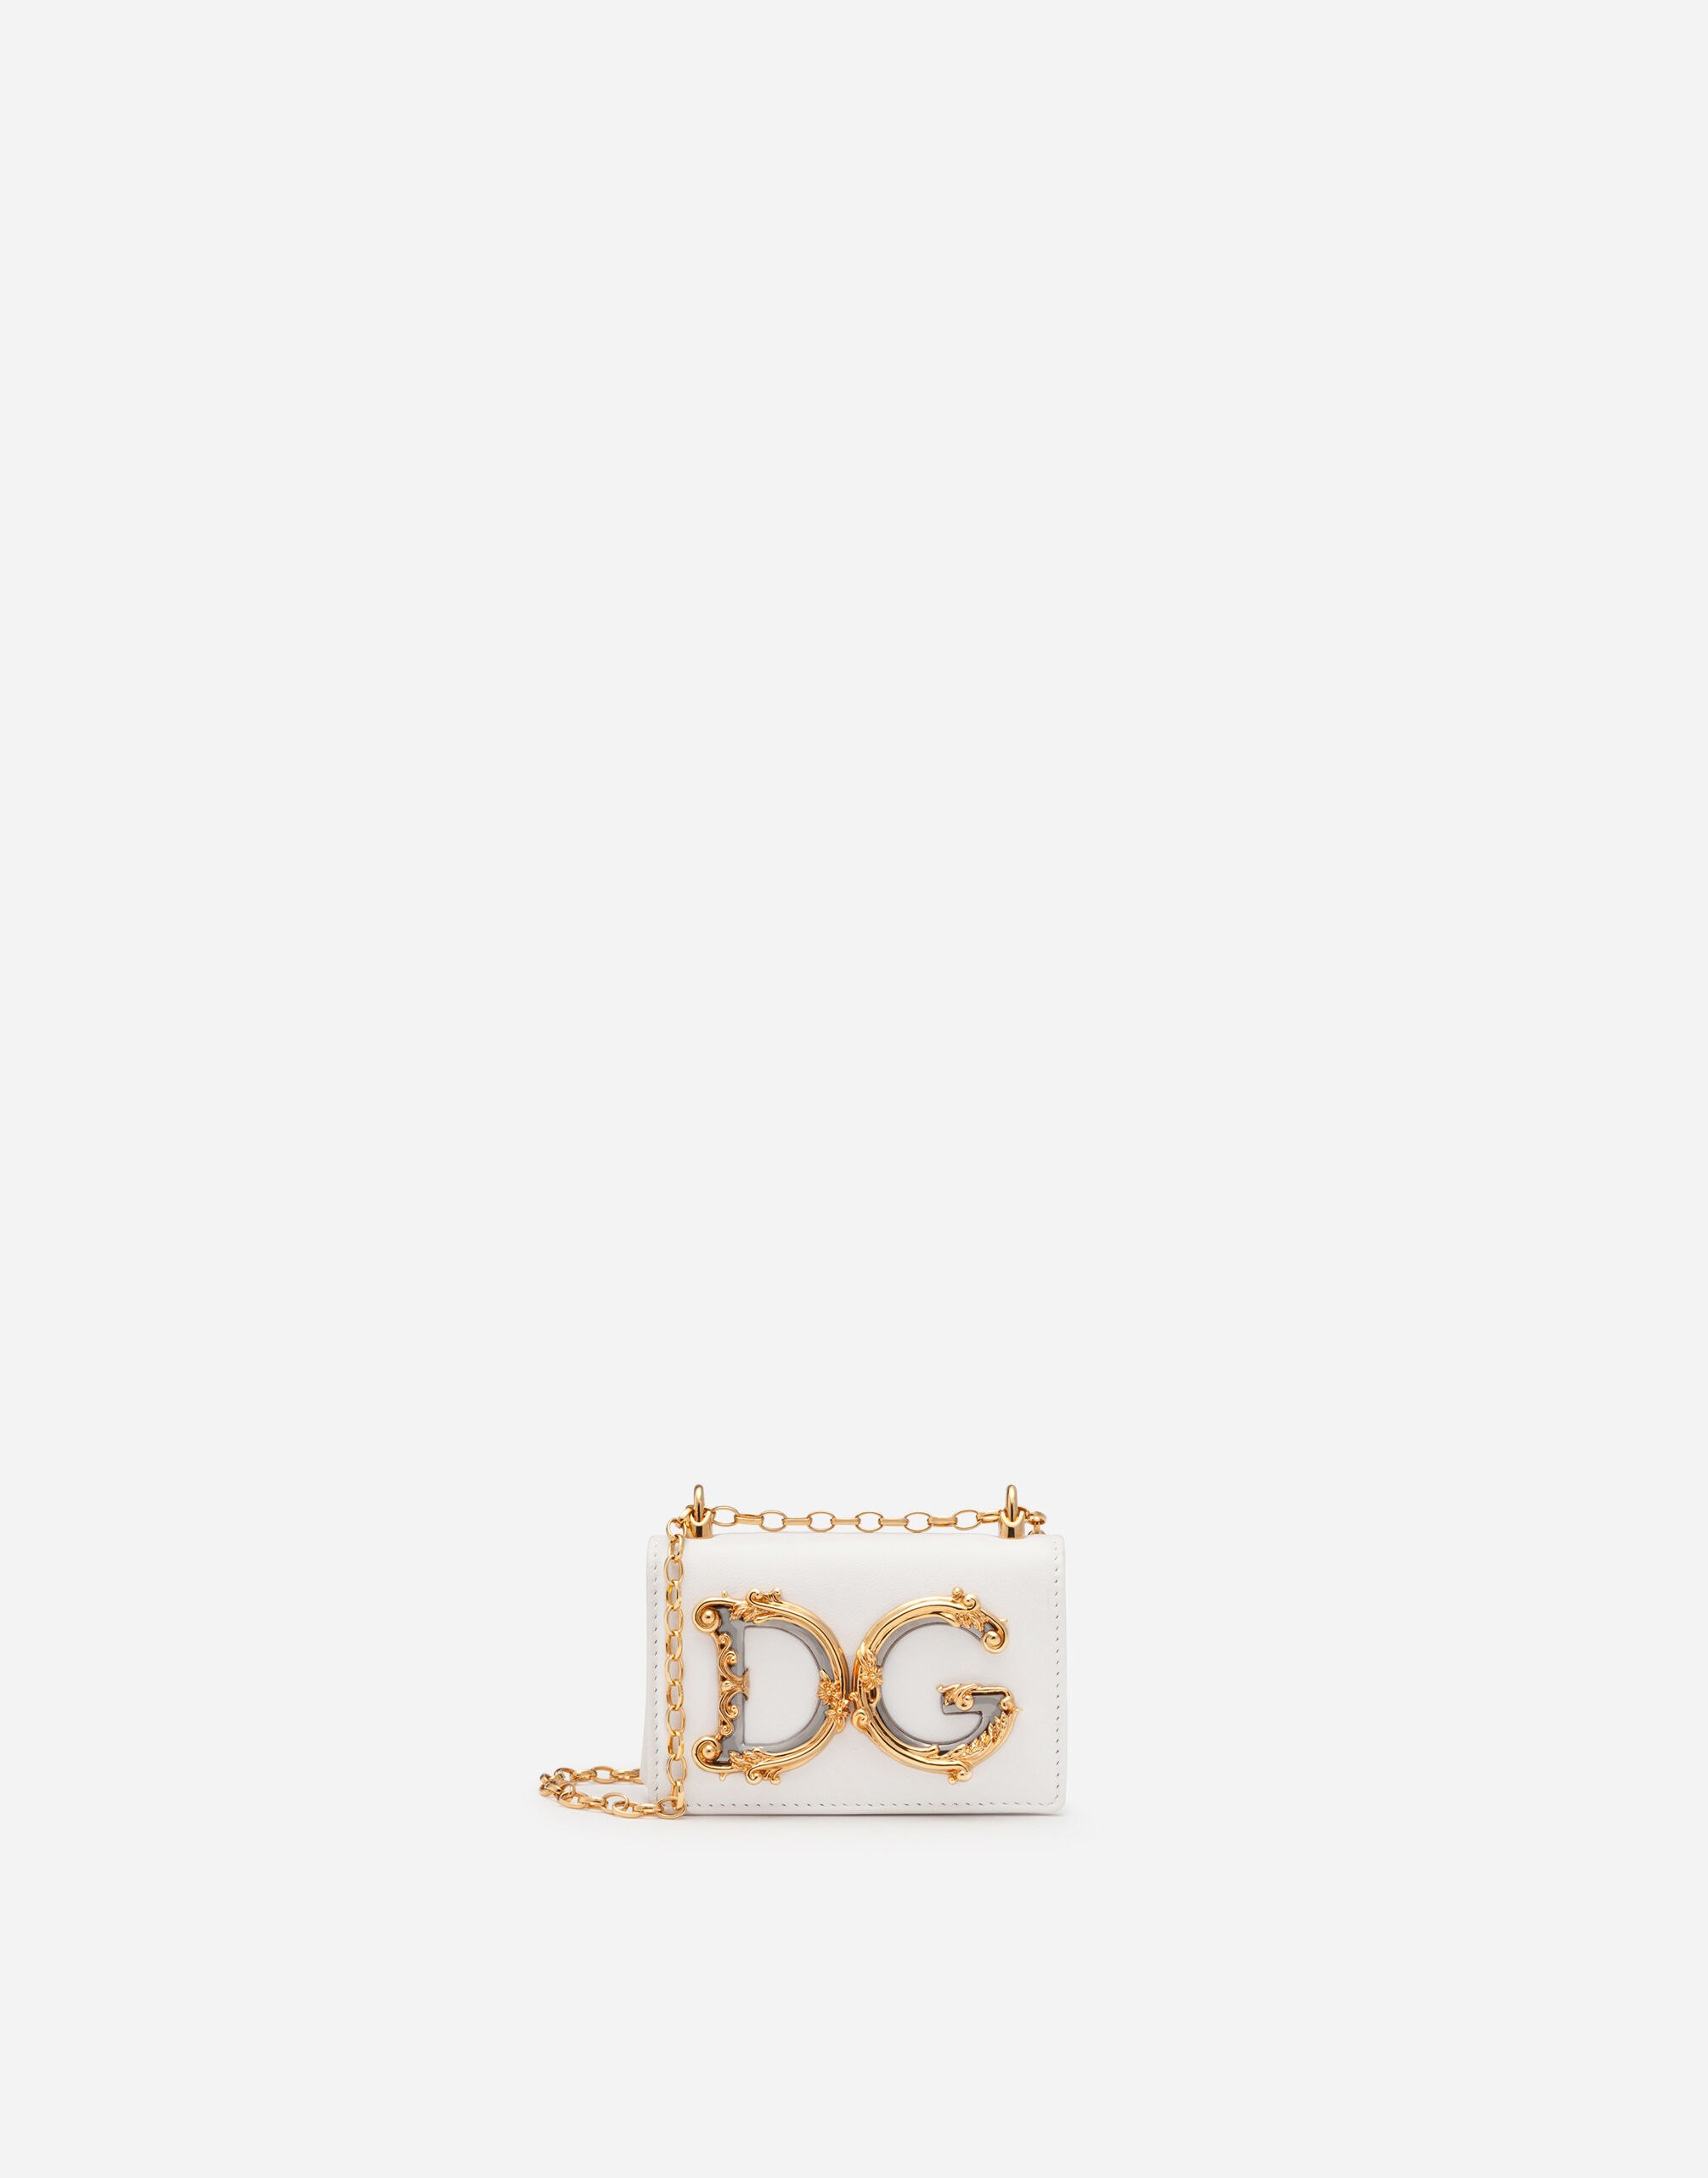 Dolce & Gabbana DG GIRLS マイクロバッグ スムースカーフスキン ピンク BB6003A1001